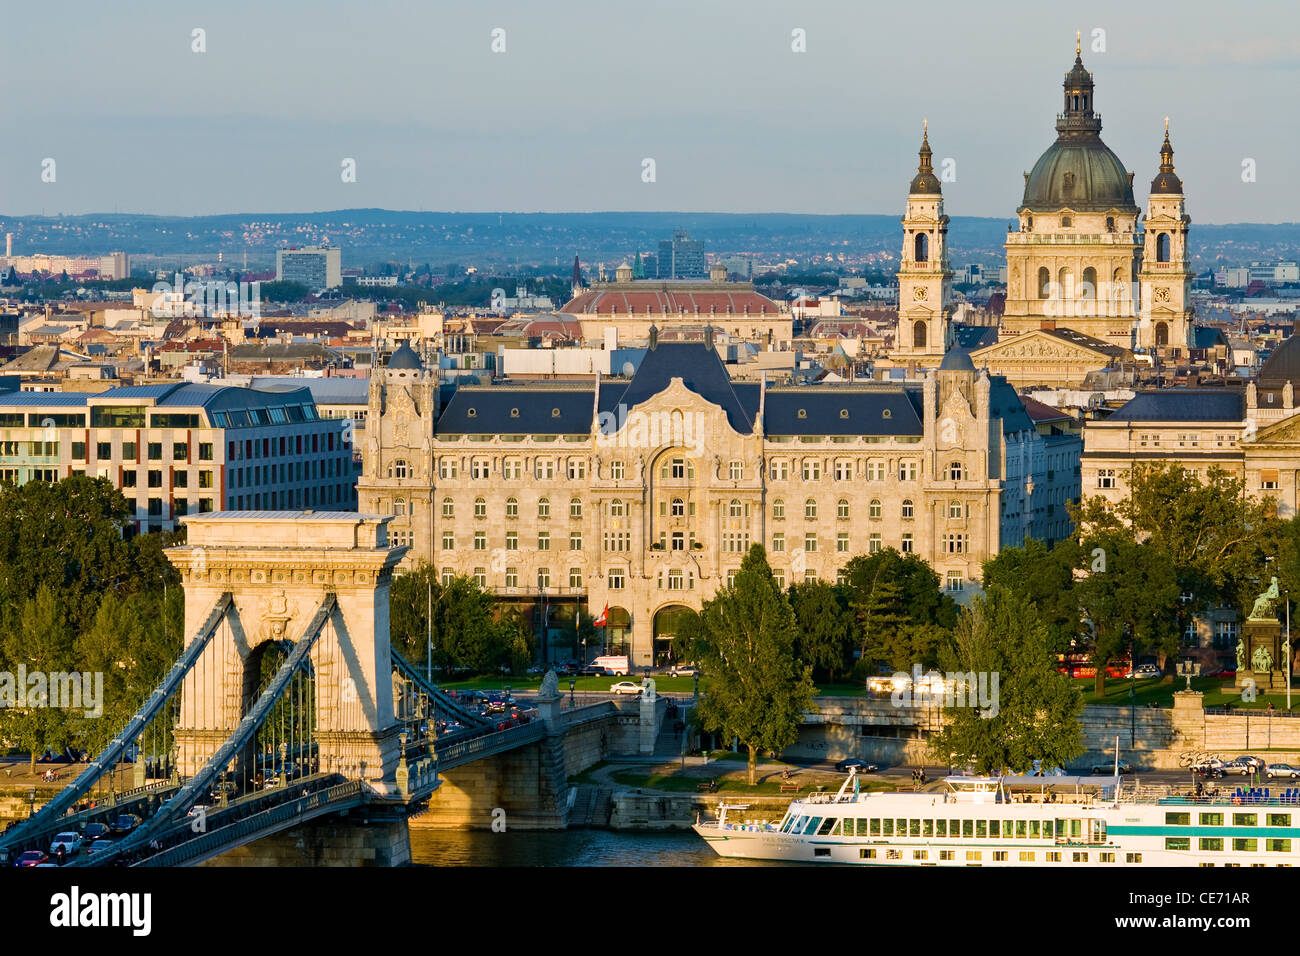 Il ponte della catena (Szechenyi lanchid), Gresham Palace e di Santo Stefano (Basilica Szent Istvan Bazilica), Budapest, Ungheria. Foto Stock